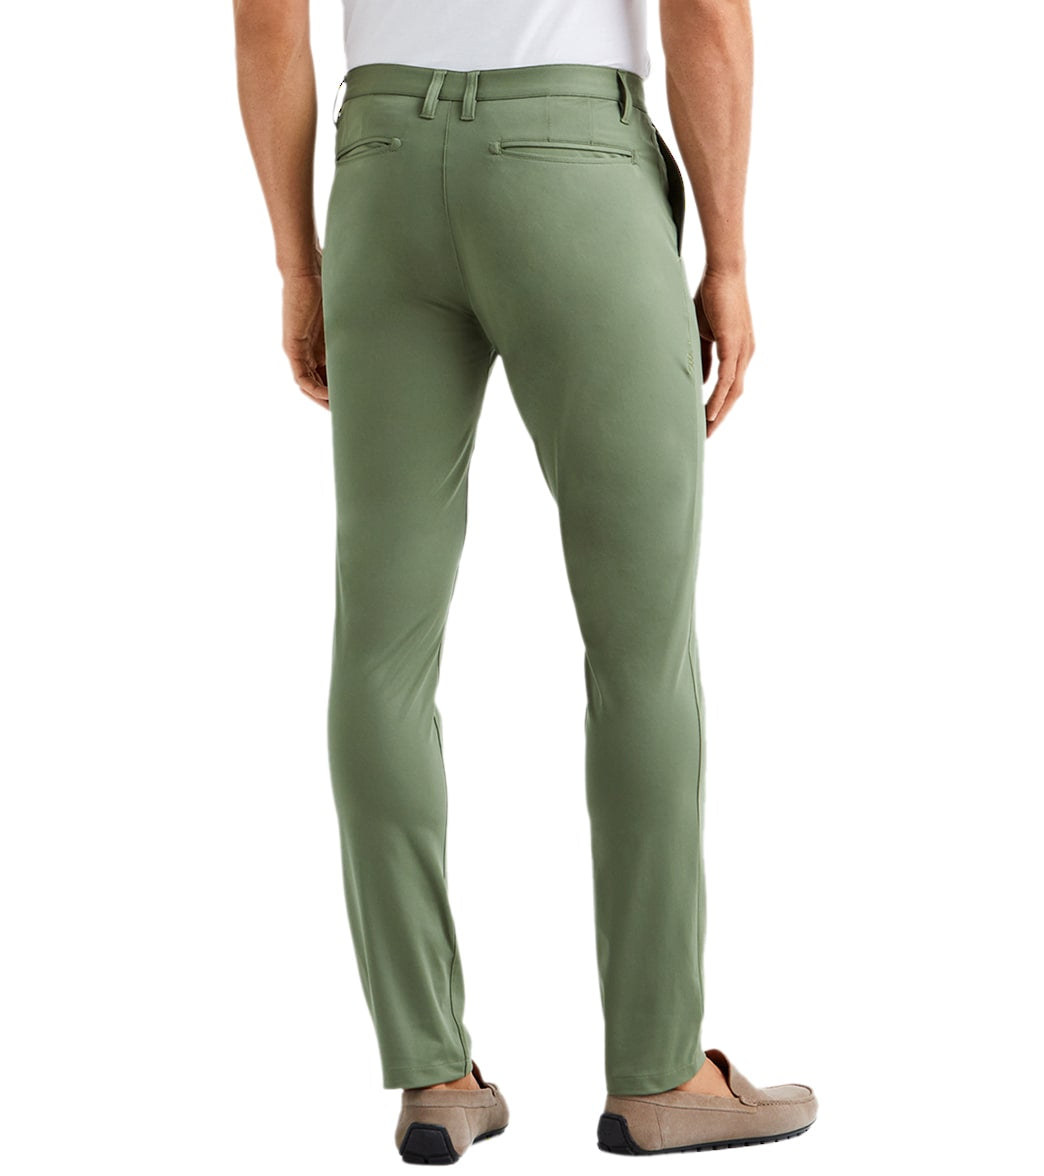 Rhone Men's Slim Commuter Pants at YogaOutlet.com - Free Shipping –